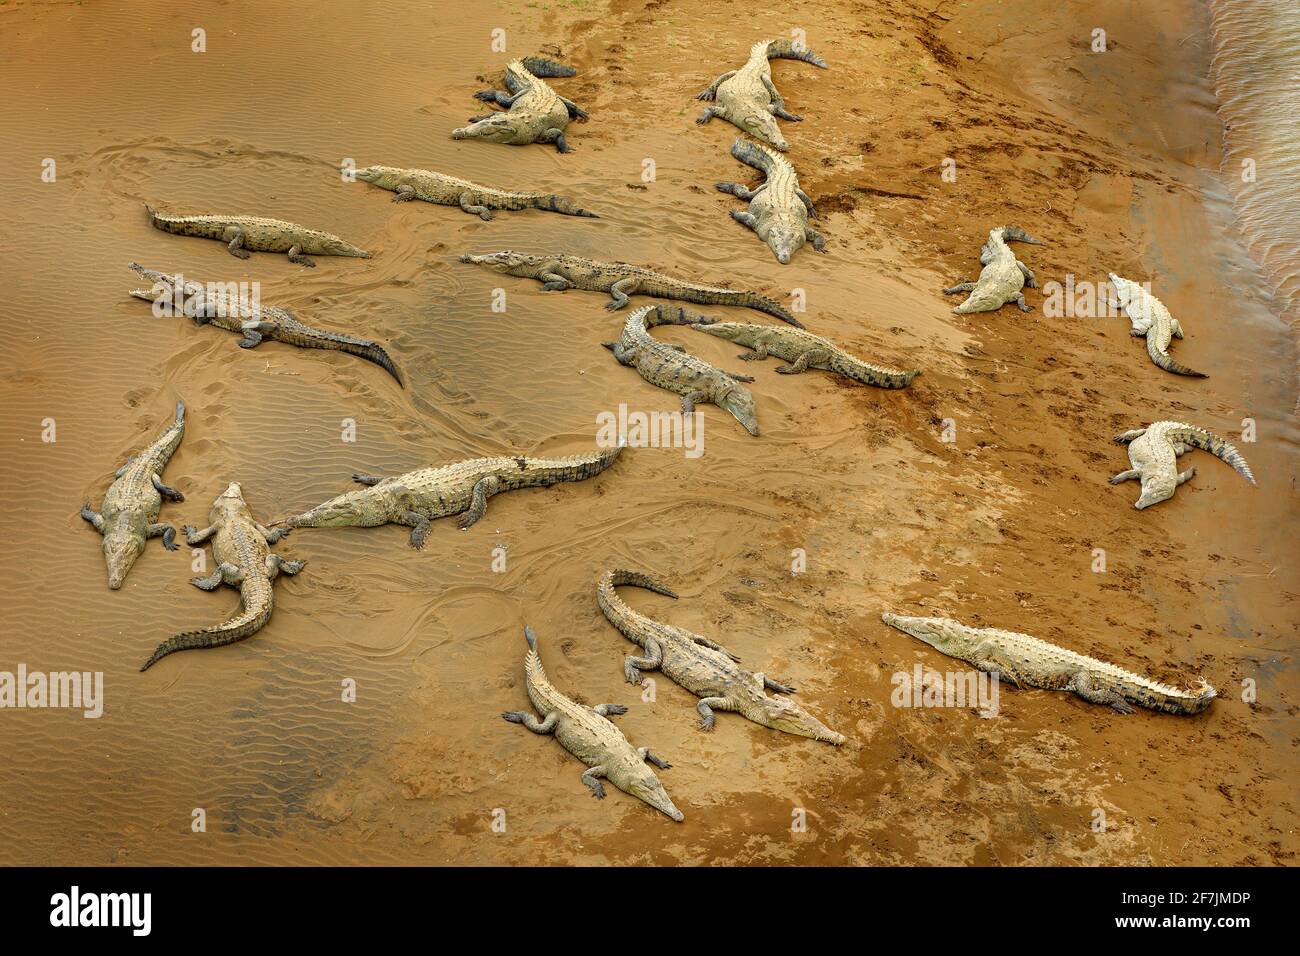 A lot of American crocodiles, Crocodylus acutus, beach near the river water. Wildlife scene from nature, Tarcoles, Costa Rica. Dangerous animals in th Stock Photo